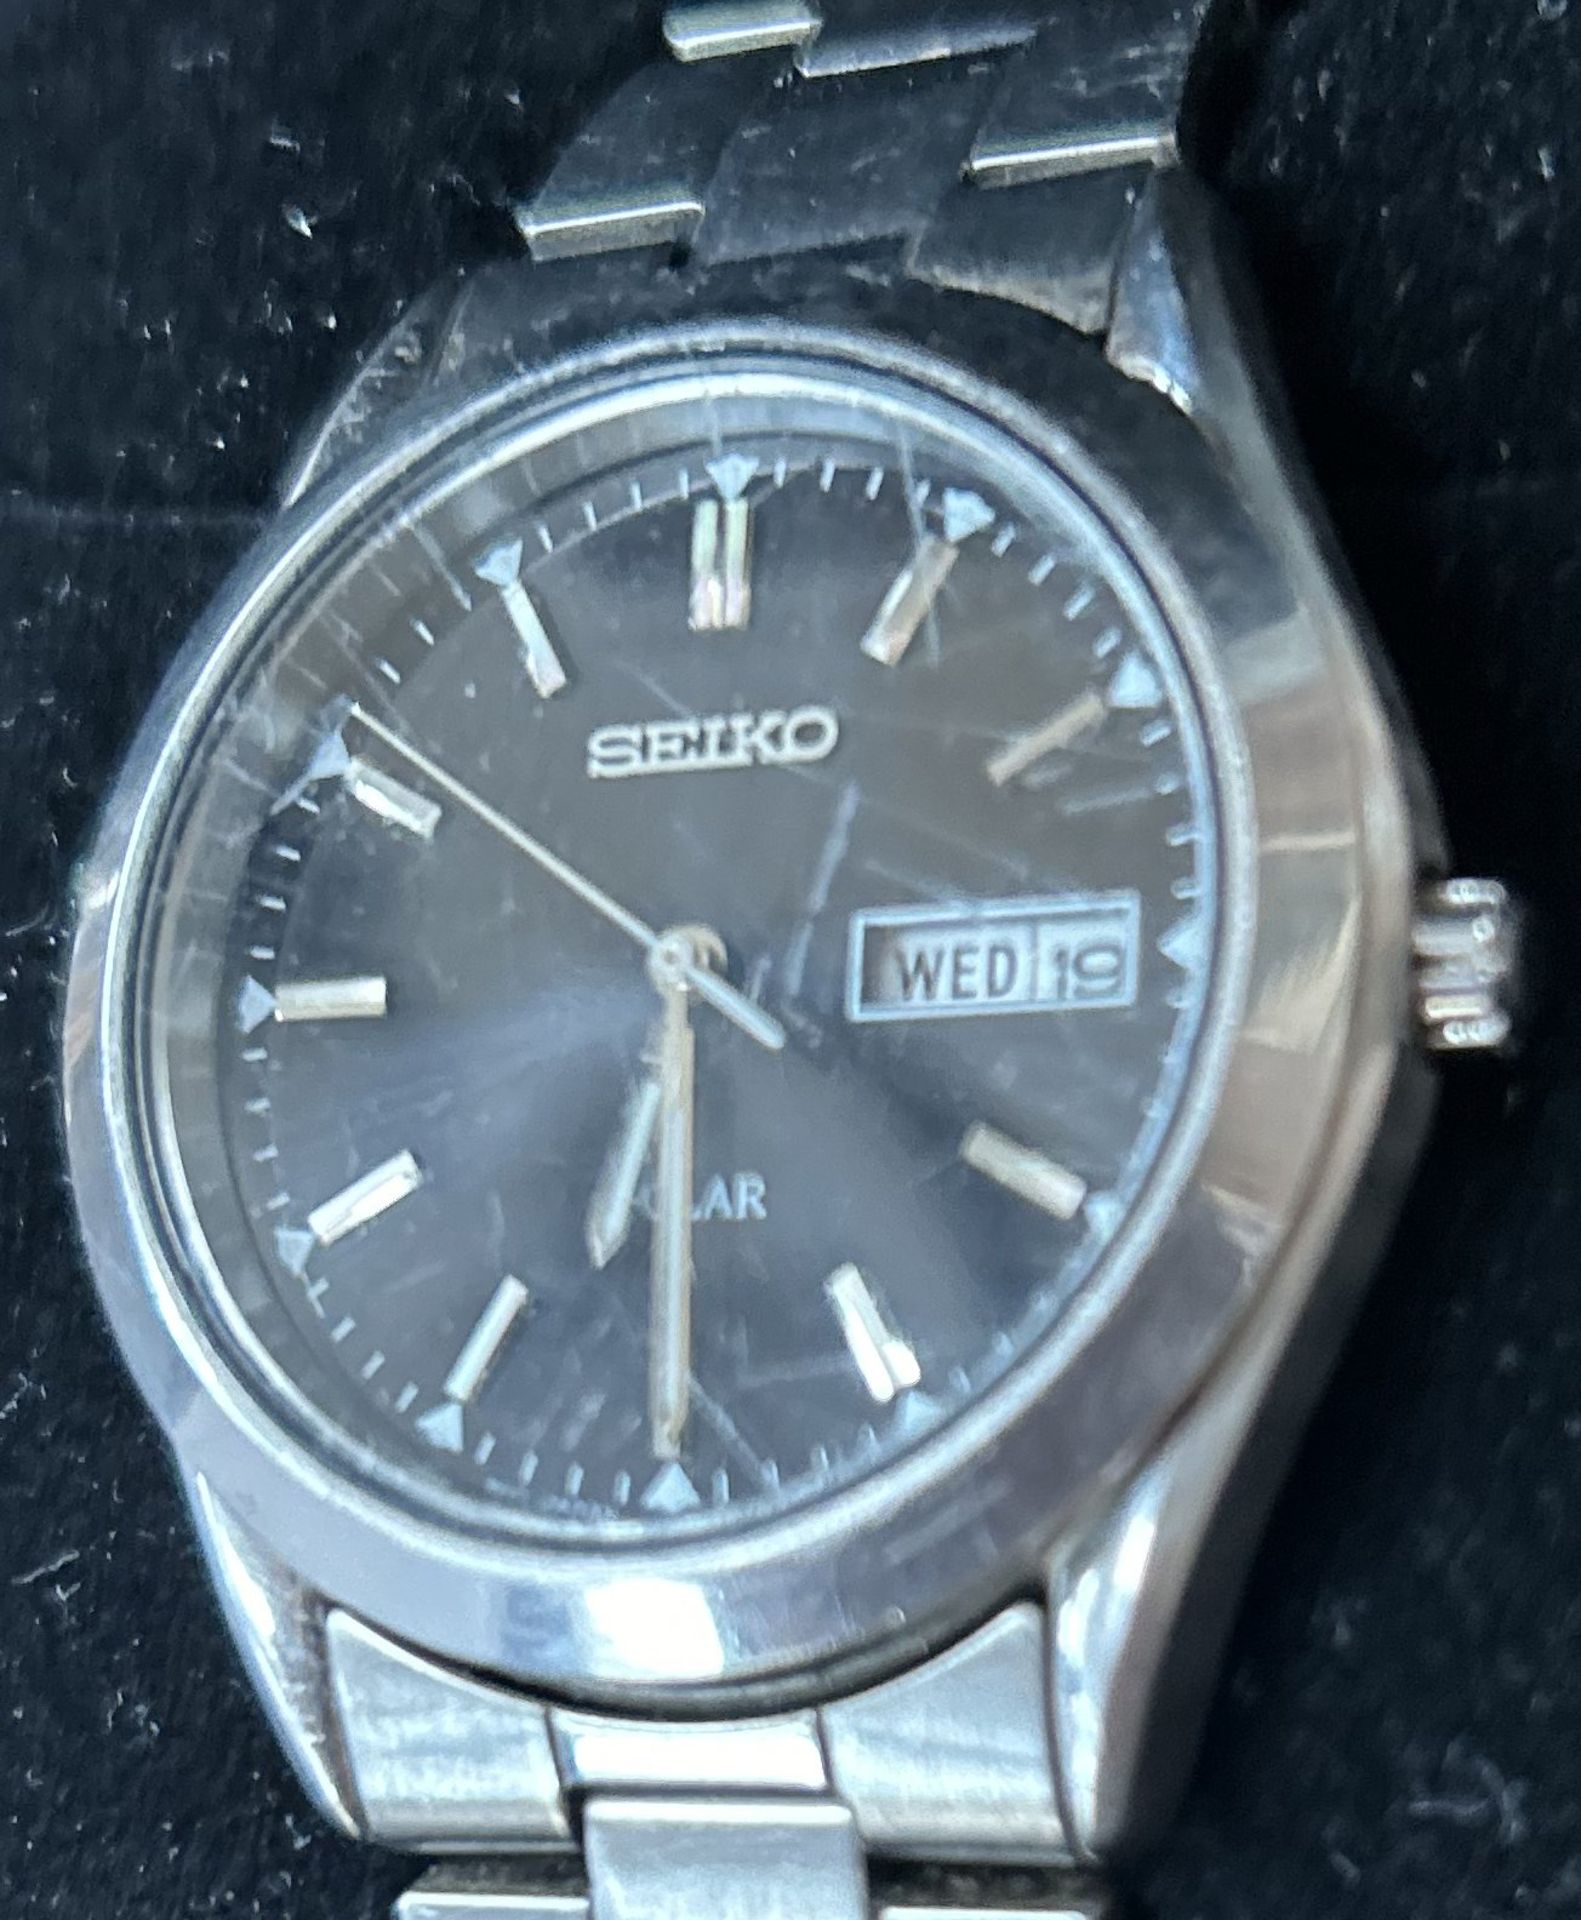 Solar Uhr "Seiko" in orig. Karton, Nr. 344739, V-1580AB0, guter Zustand, orig. Stahlband, Werk läu